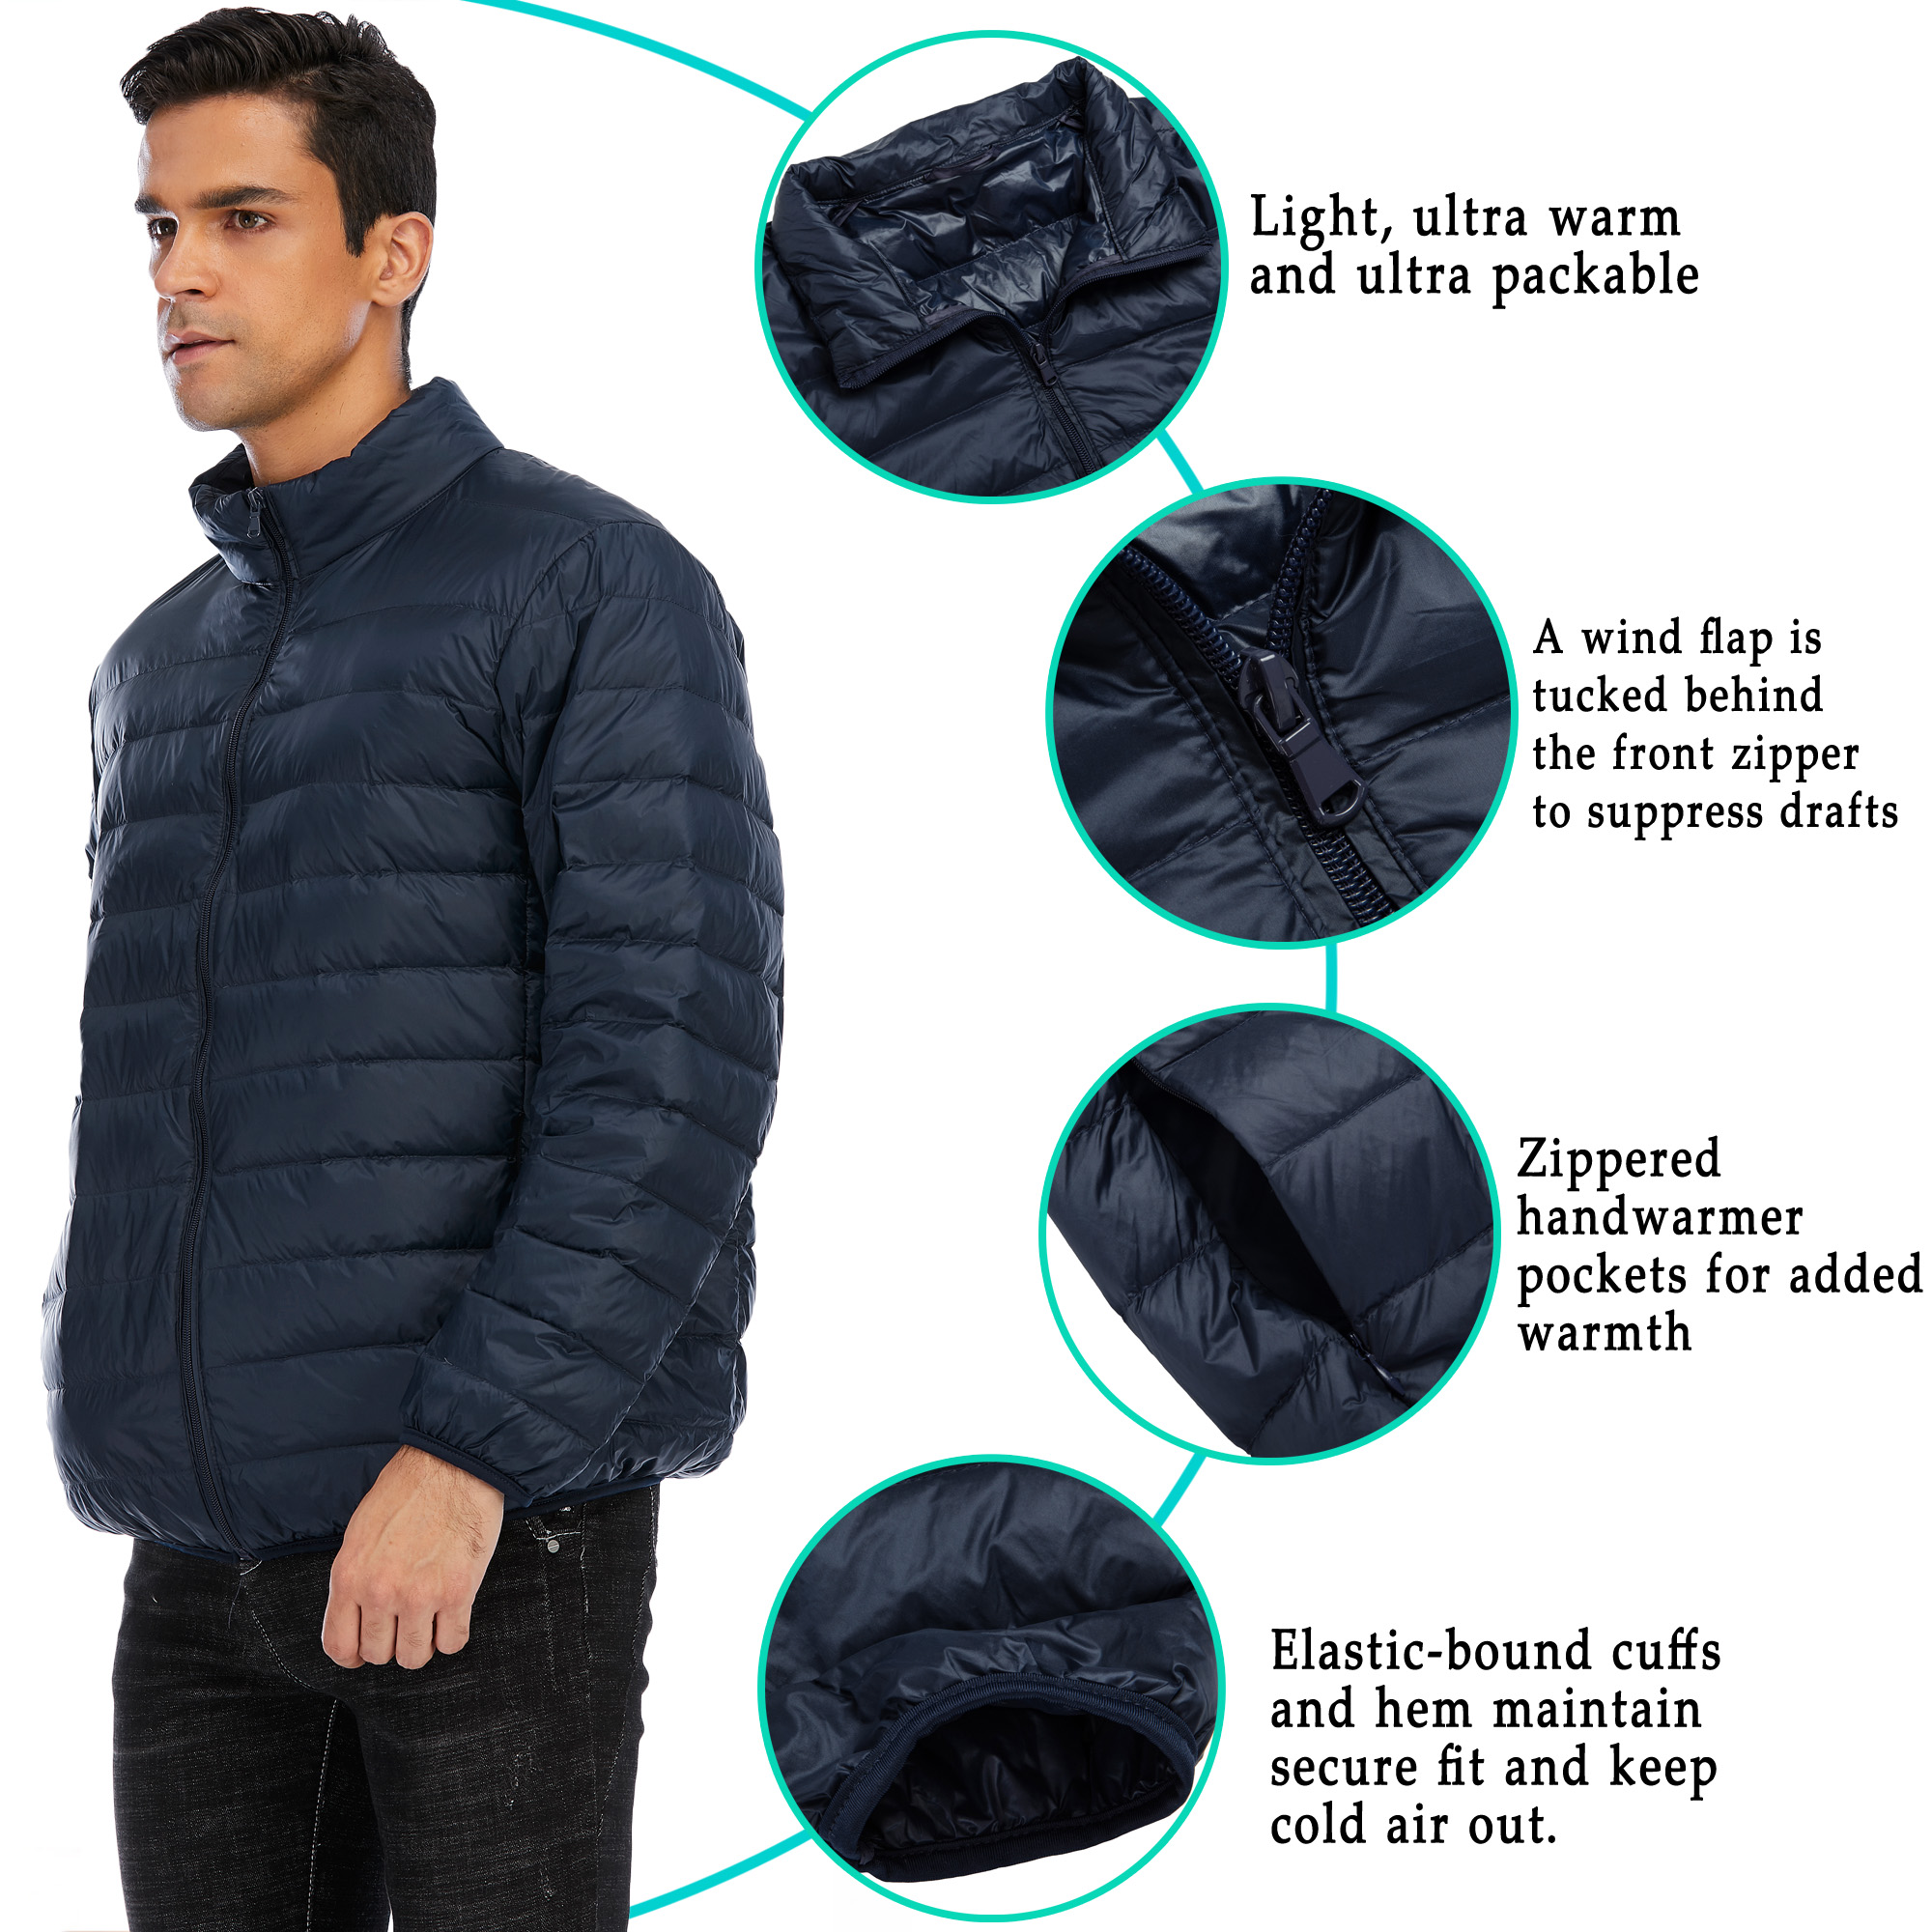 Men's Packable Down Jacket Winter Warm Jacket lightweight Zipper Jacket Puffer Bubble Coat Black Blue - image 3 of 7